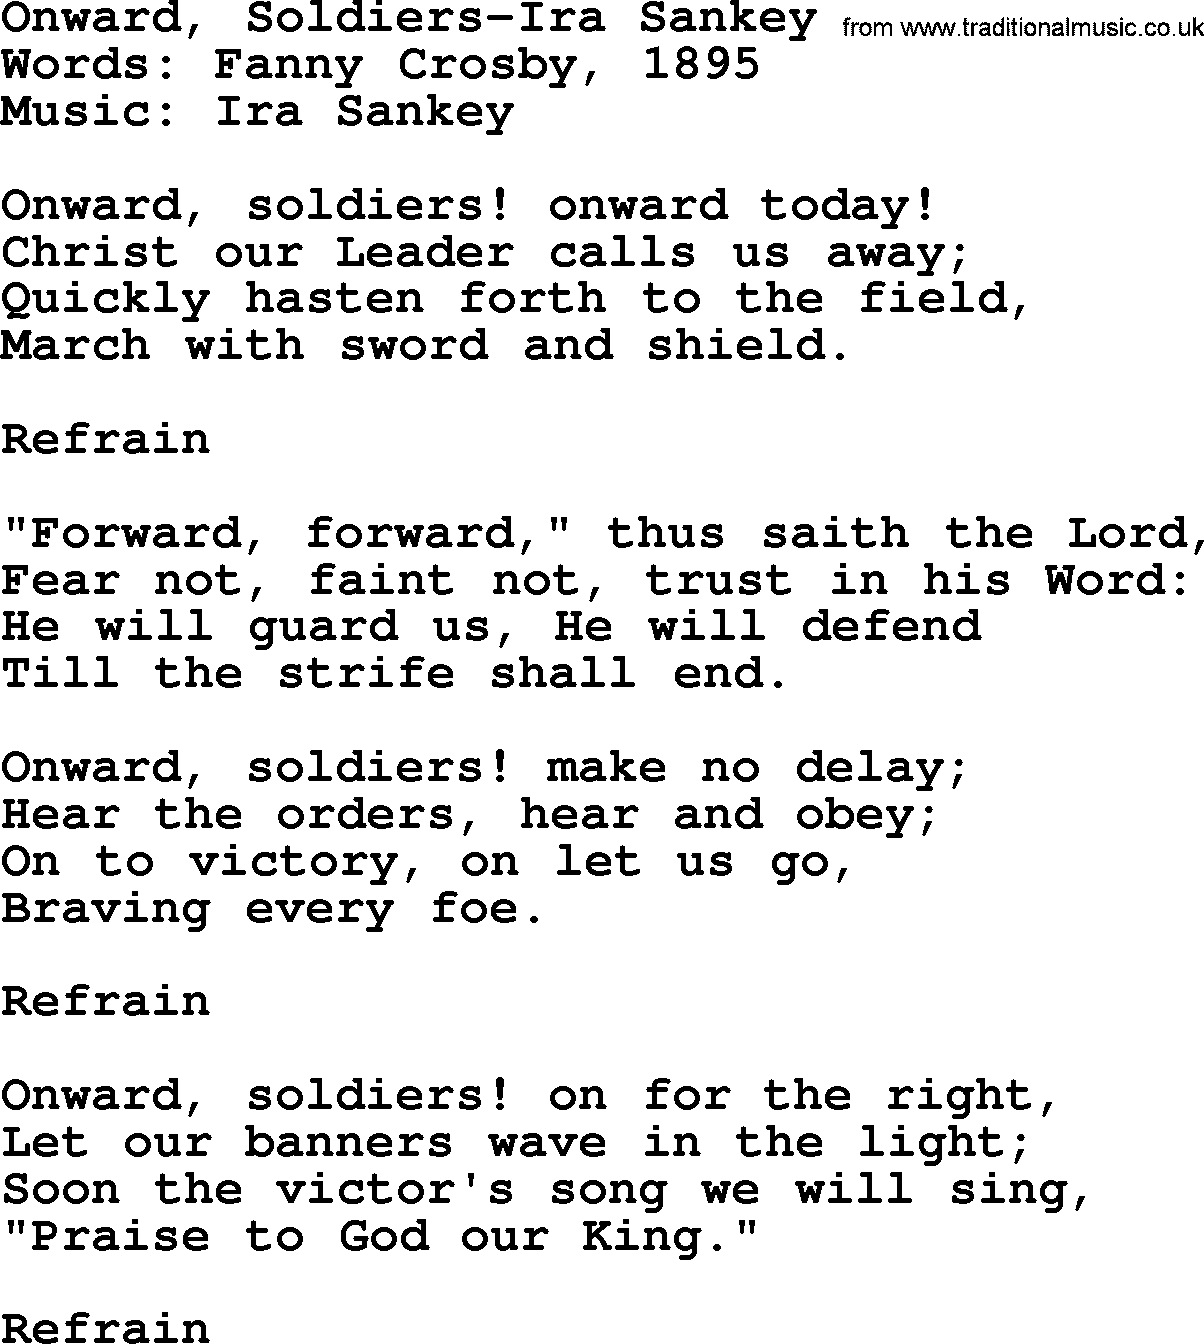 Ira Sankey hymn: Onward, Soldiers-Ira Sankey, lyrics